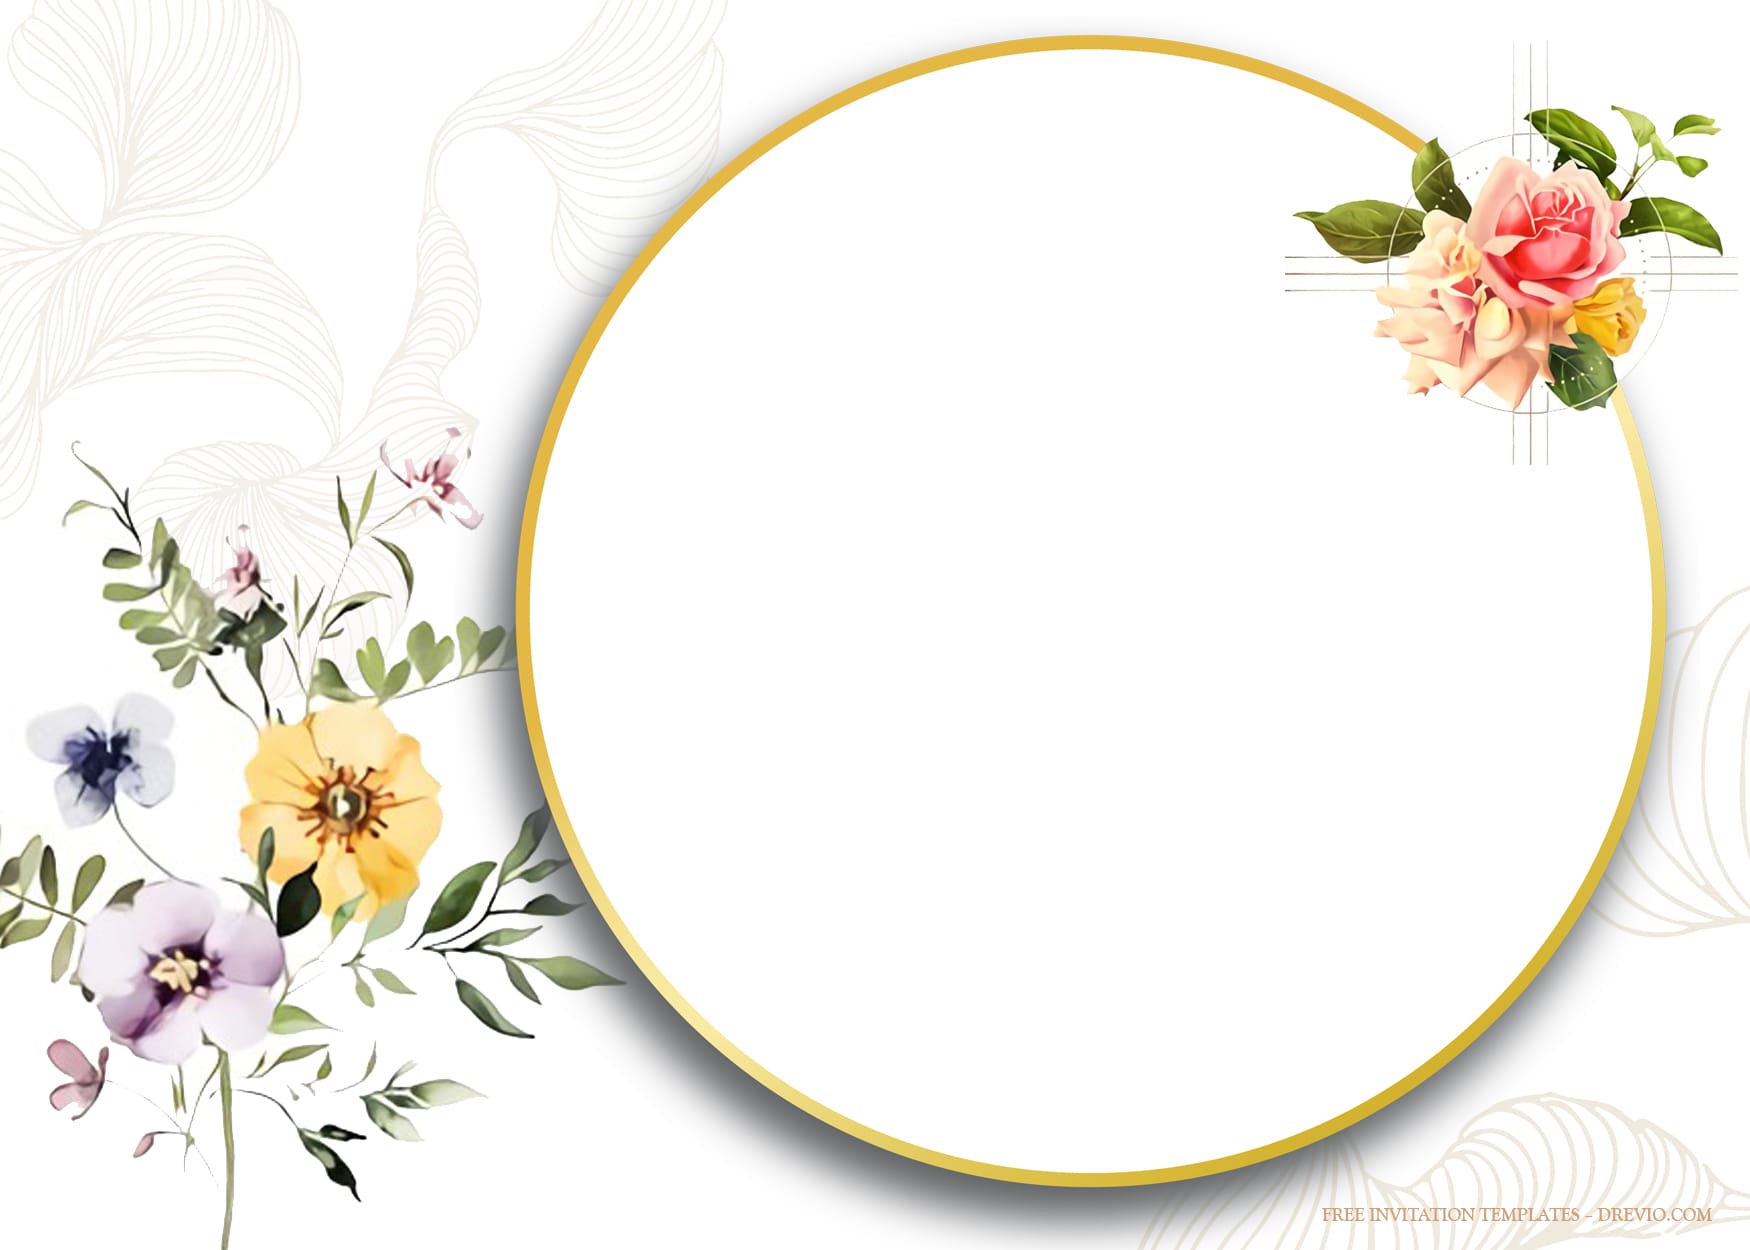 7+ Midsummer Wildflowers Garden Wedding Invitation Templates Type Four